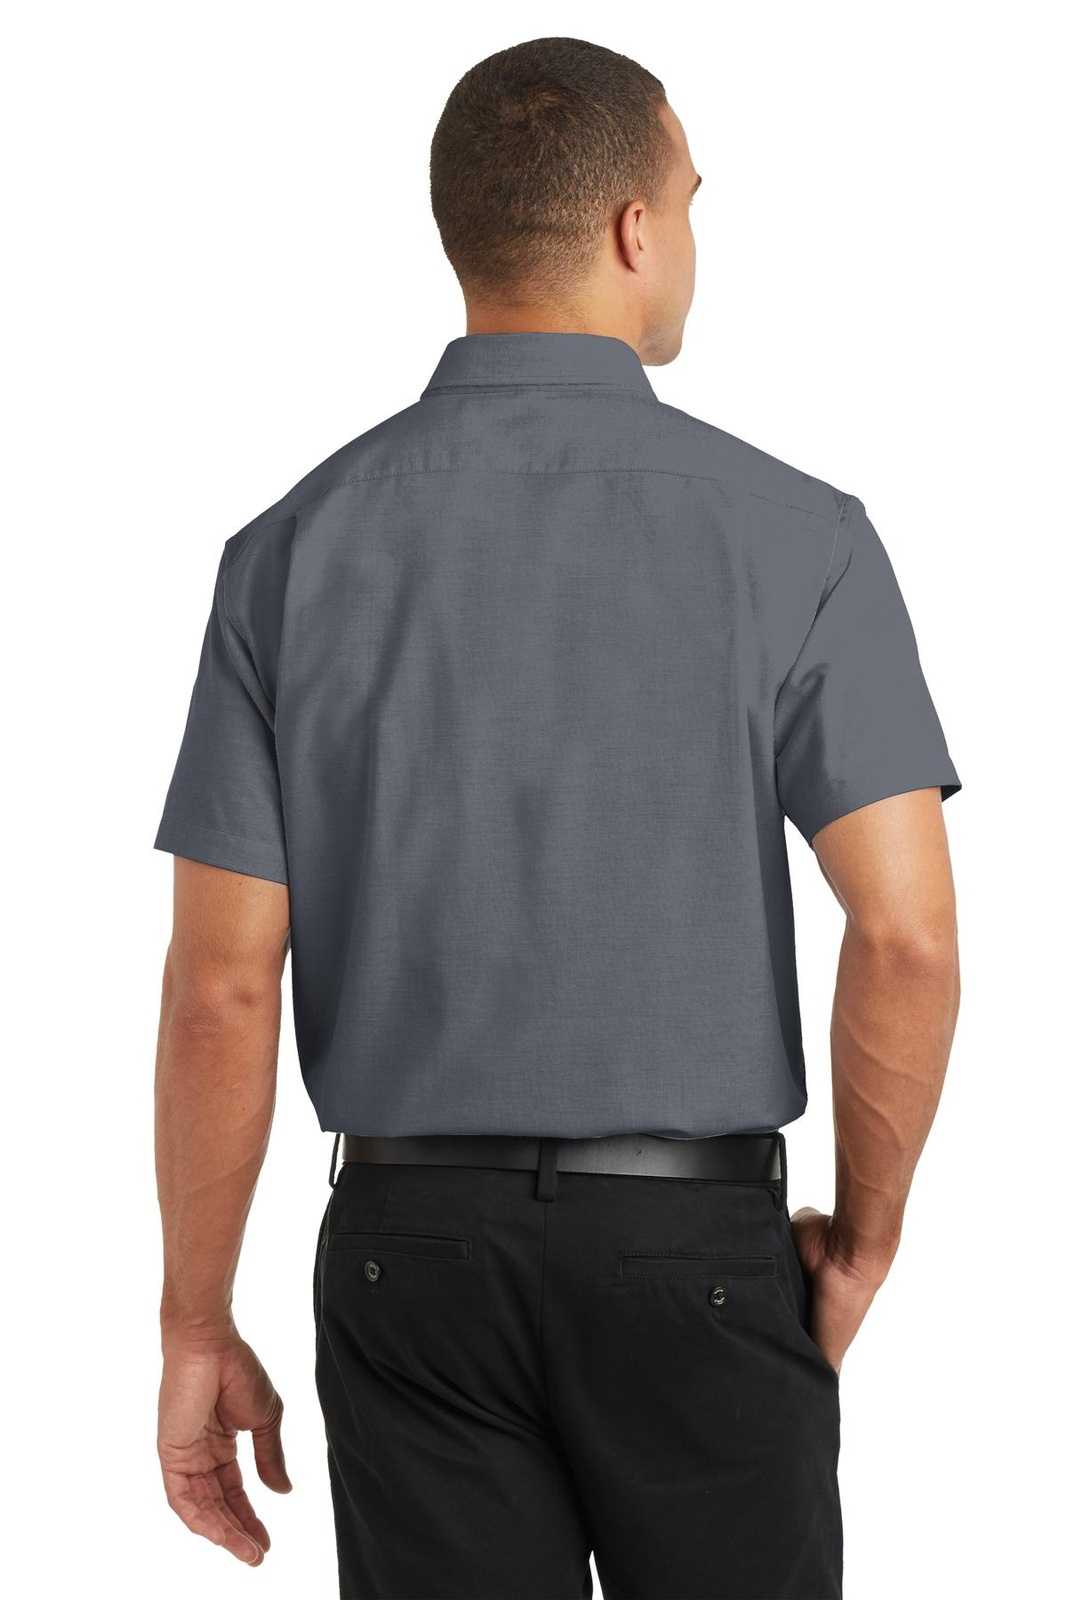 Port Authority S659 Short Sleeve Superpro Oxford Shirt - Black - HIT a Double - 1